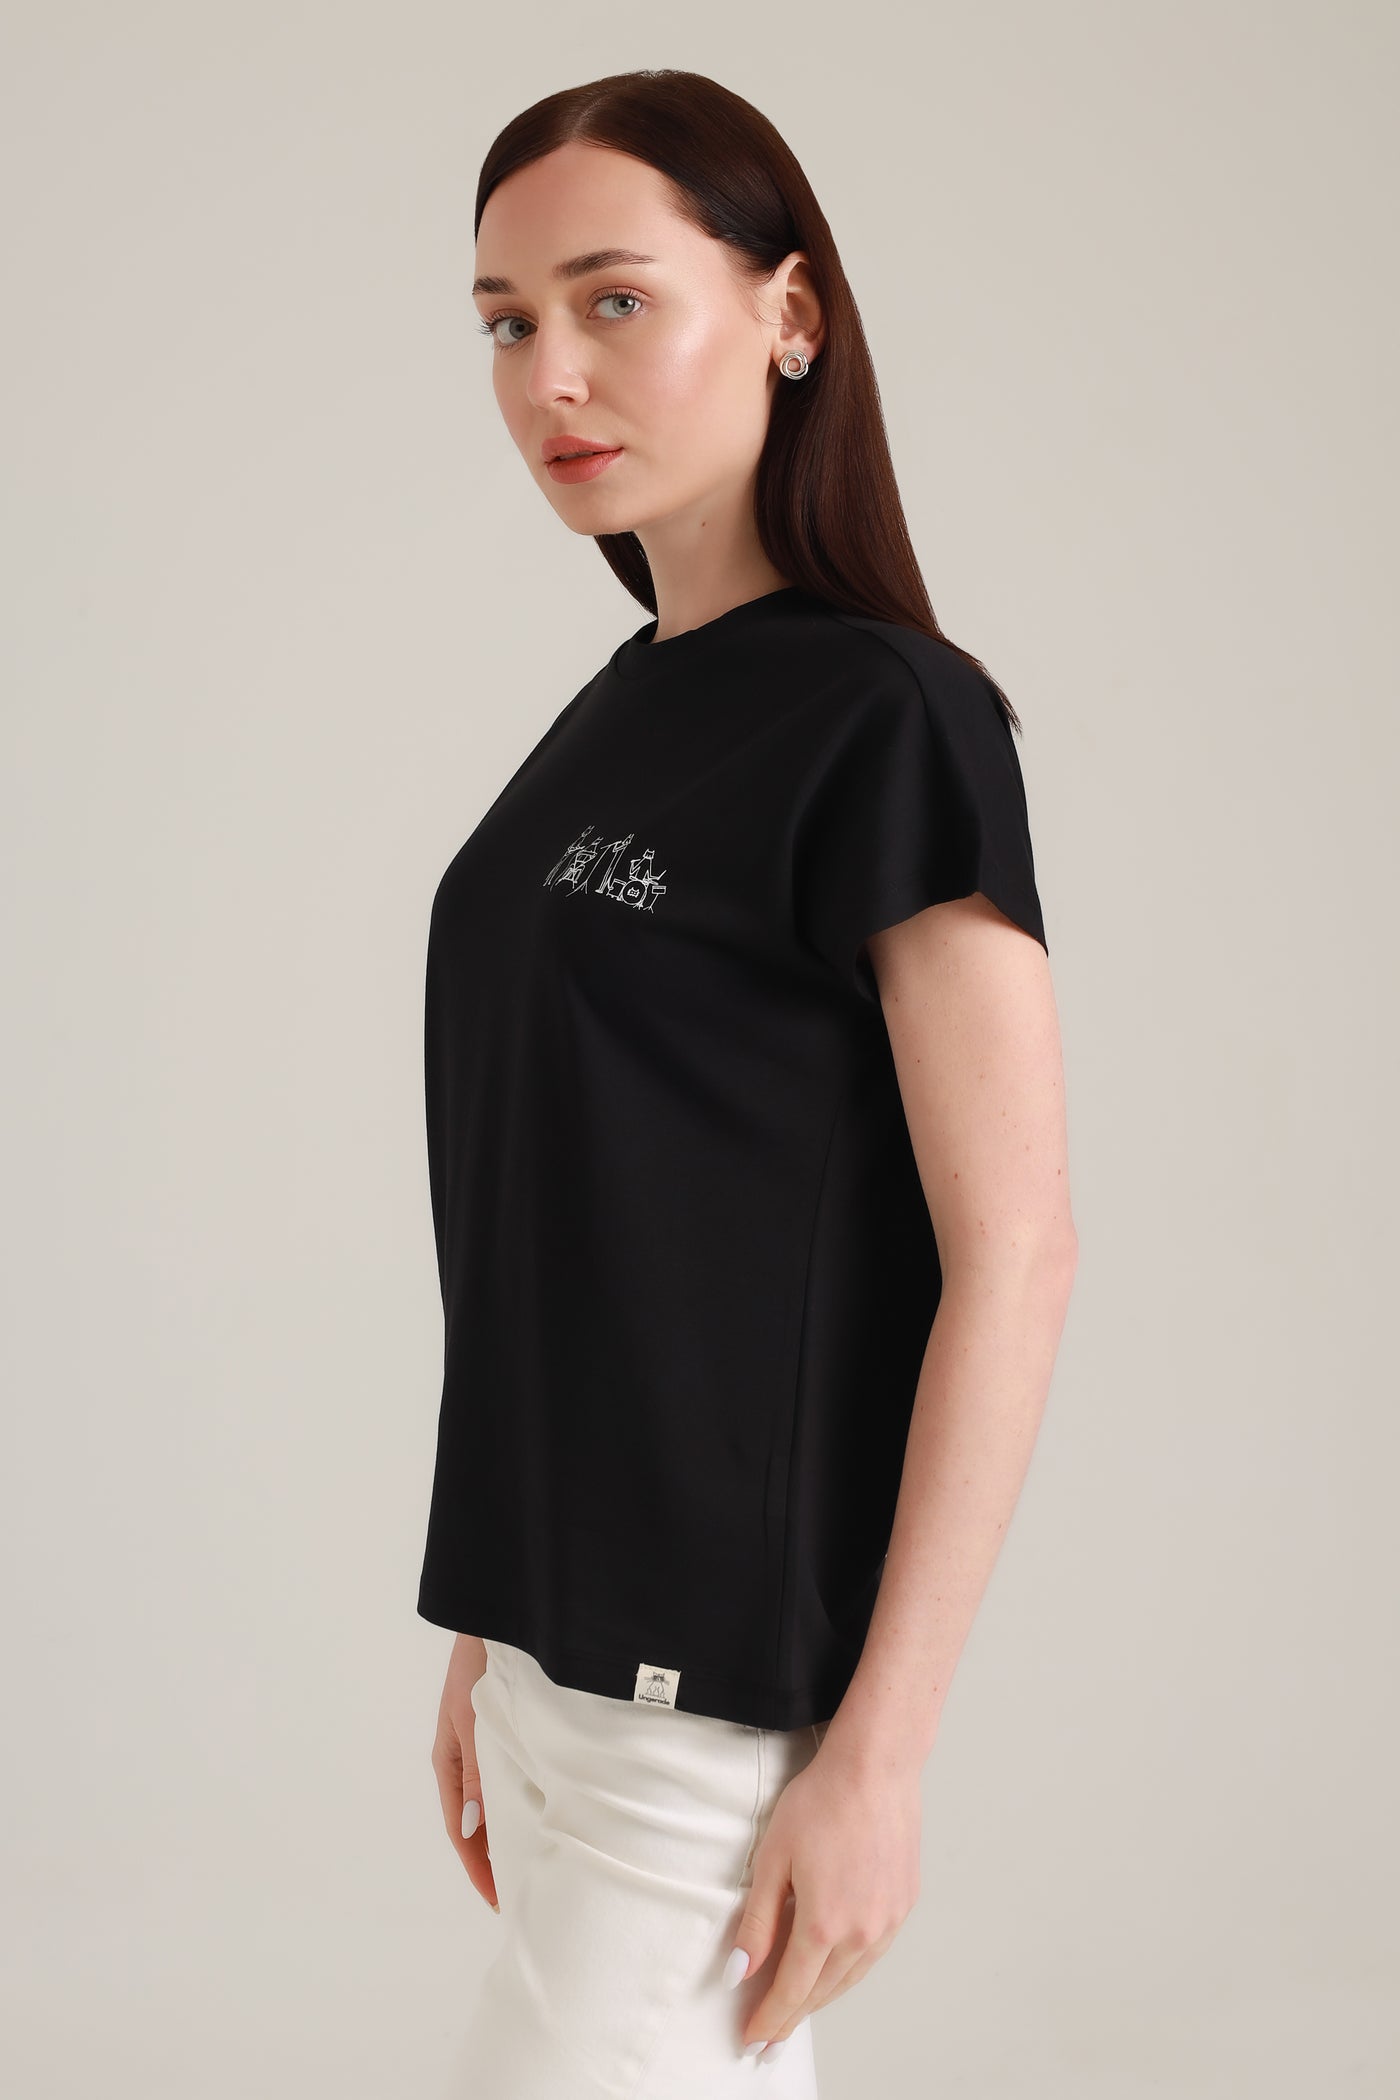 T-Shirt Women Short Sleeves Cat Band Black